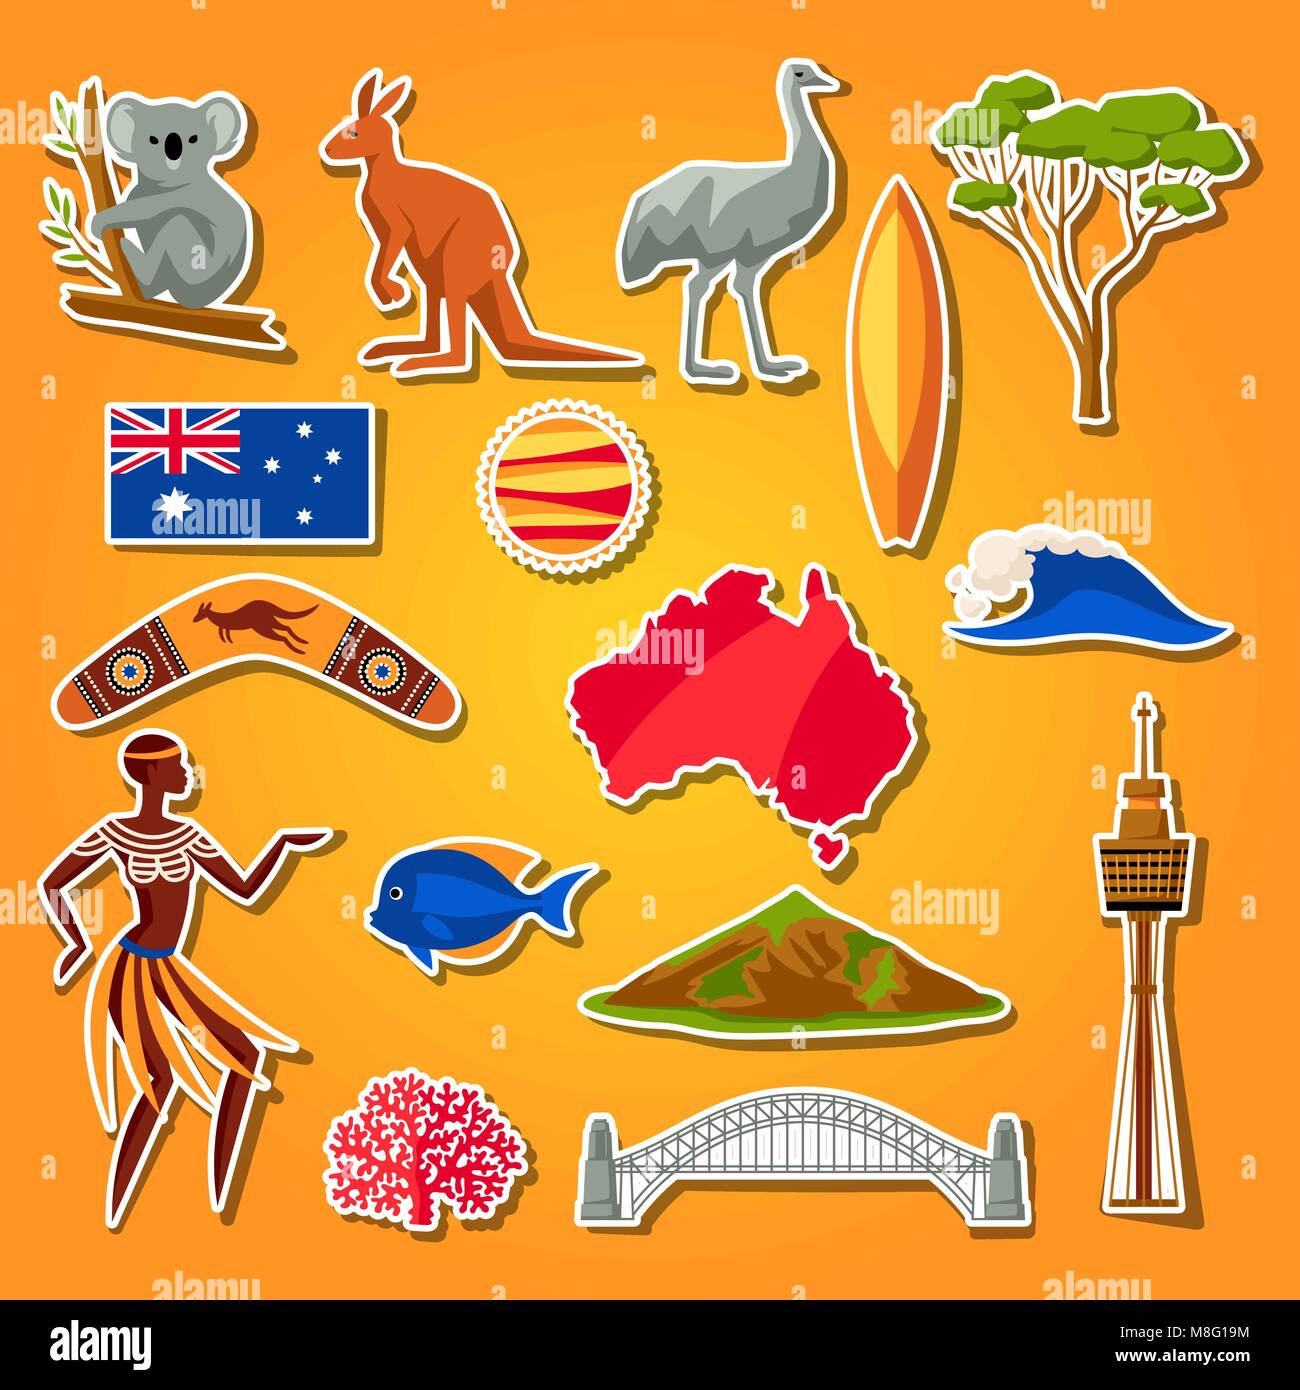 Australia icons set. Australian traditional sticker symbols and objects Stock Vector